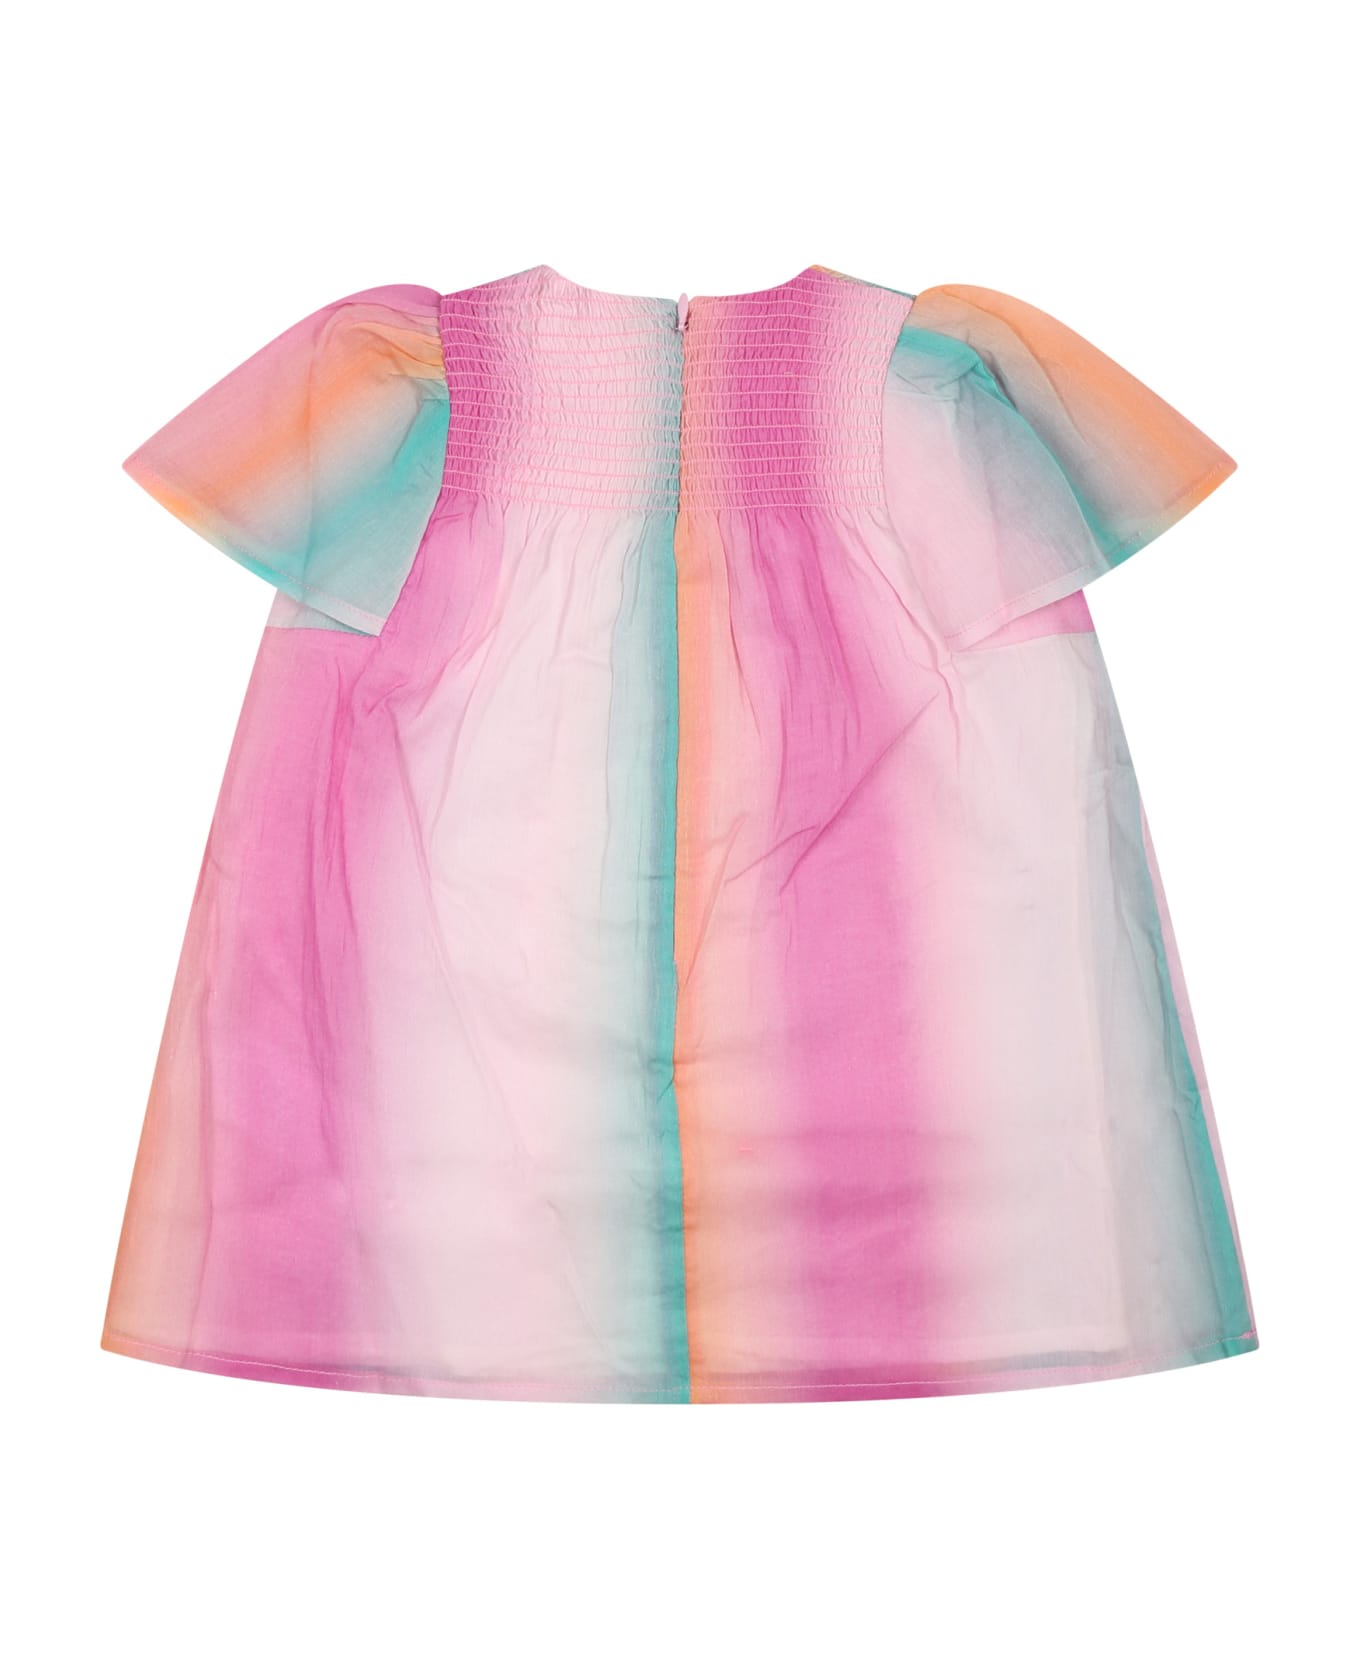 Chloé Multicolor Dress For Baby Girl - Multicolor